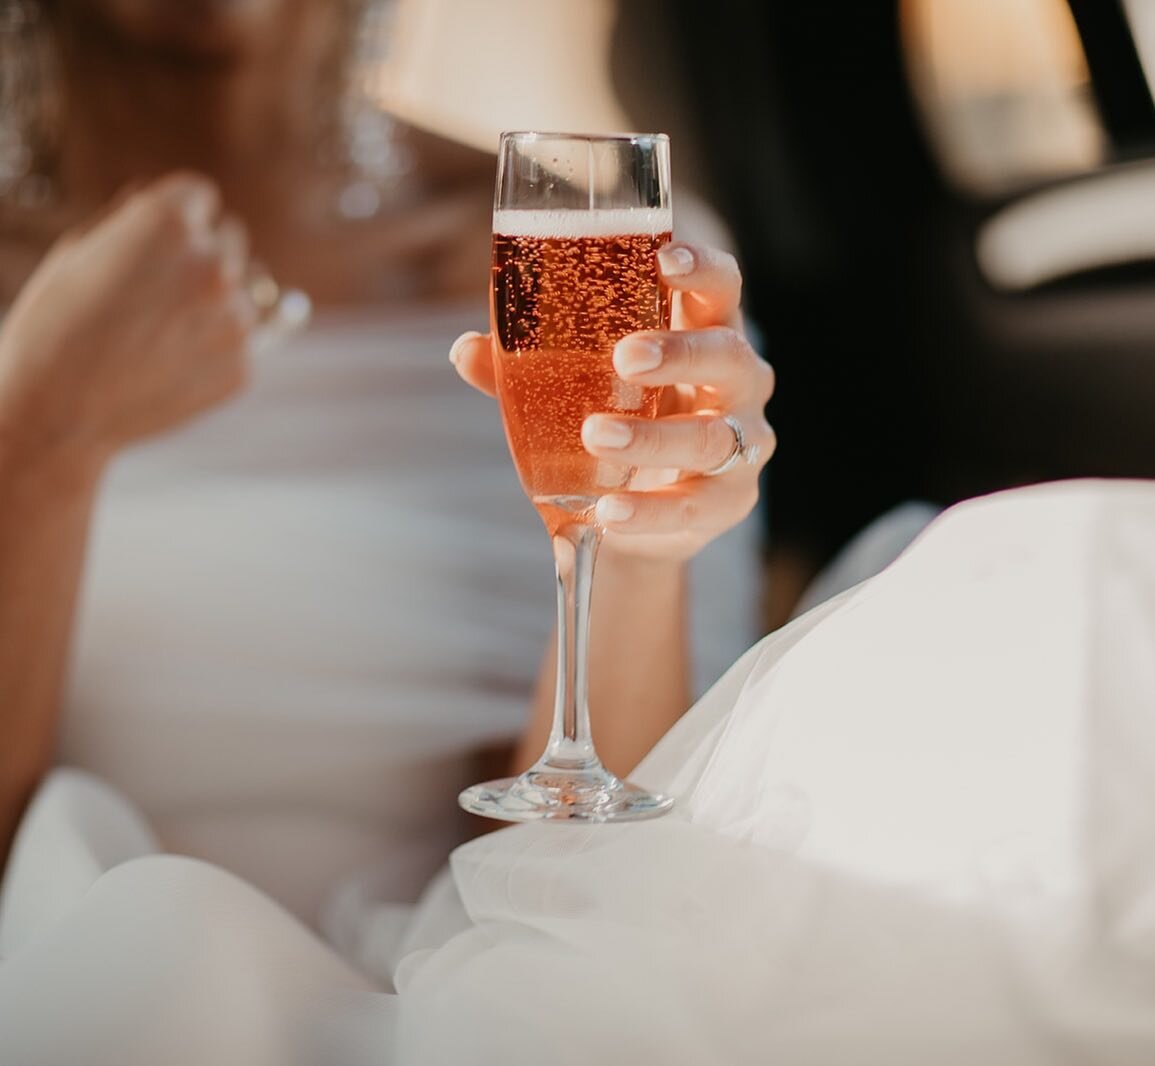 Amazing dress ✅
Sweet ride ✅
Celebratory drink ✅
📸 @marieluiseweddings 
Venue @the.wool.mill 

#celebrate #bride #champagne #drinks #wedding #limo #travel #celebrant #marriage #posse #bridal #dress #gown #gorgeous #pop #happy #weddingstyle